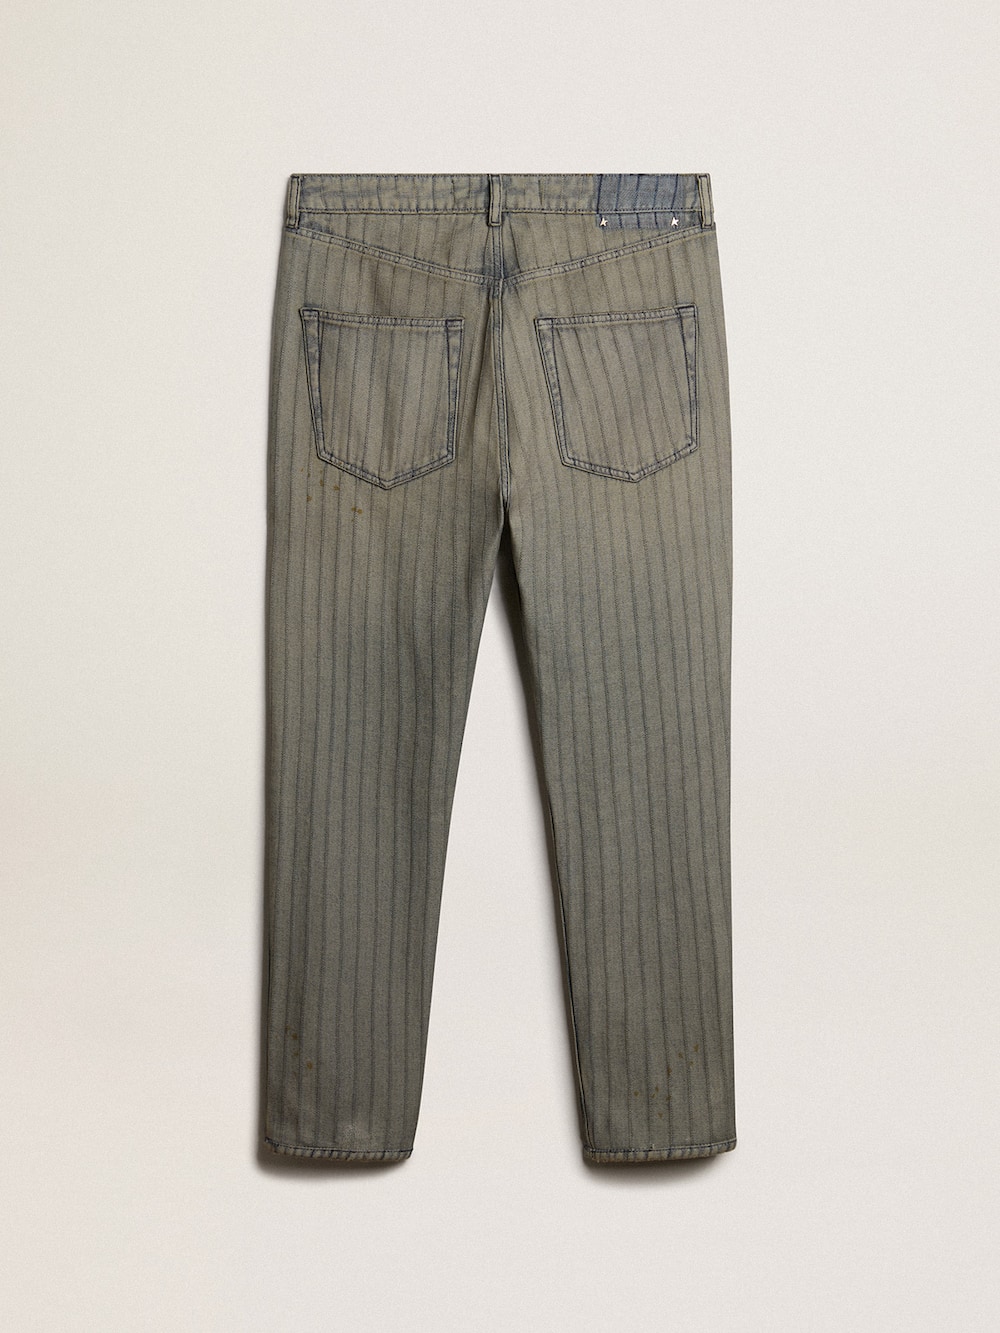 Golden Goose - Men's gray pants in striped denim in 